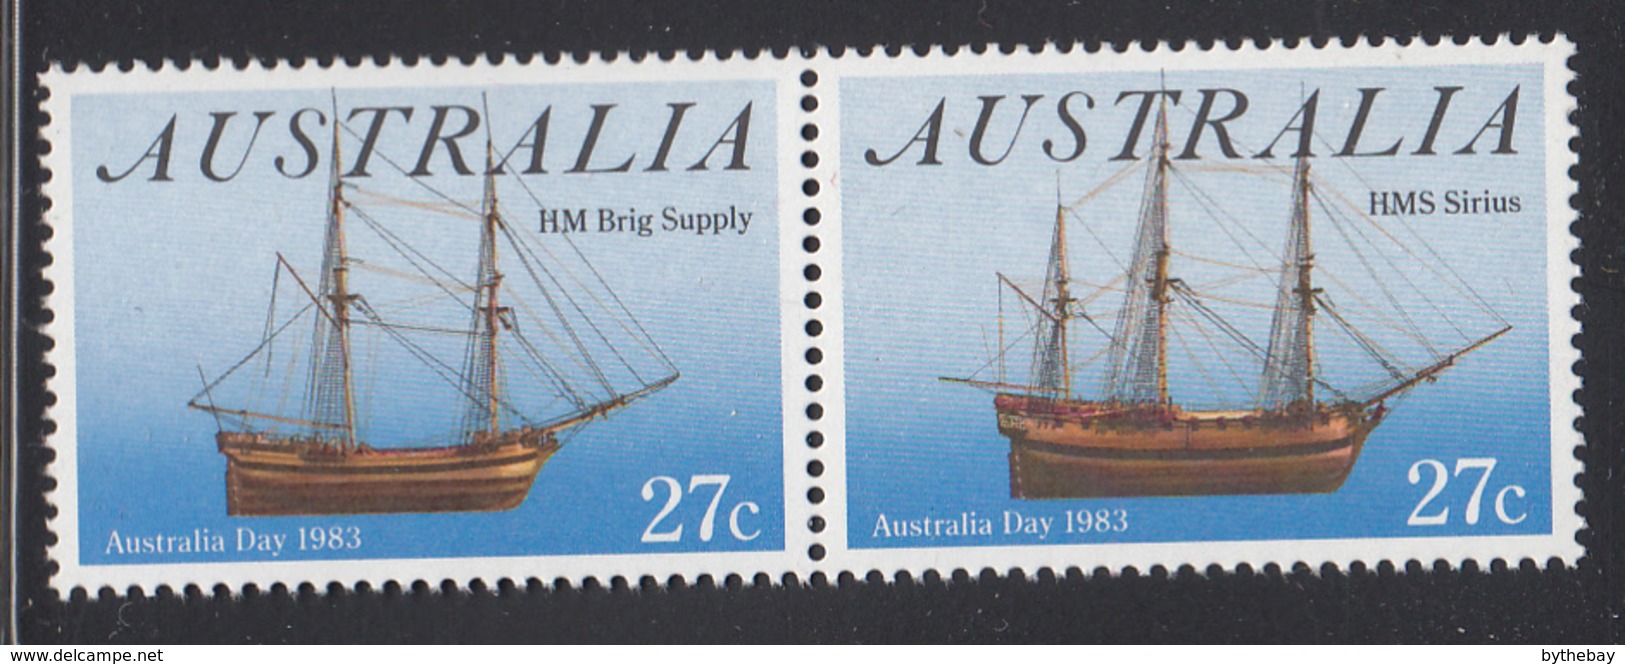 Australia 1983 MNH Scott #862a 27c HMS Sirius, HM Brig Supply Ships Australia Day - Neufs